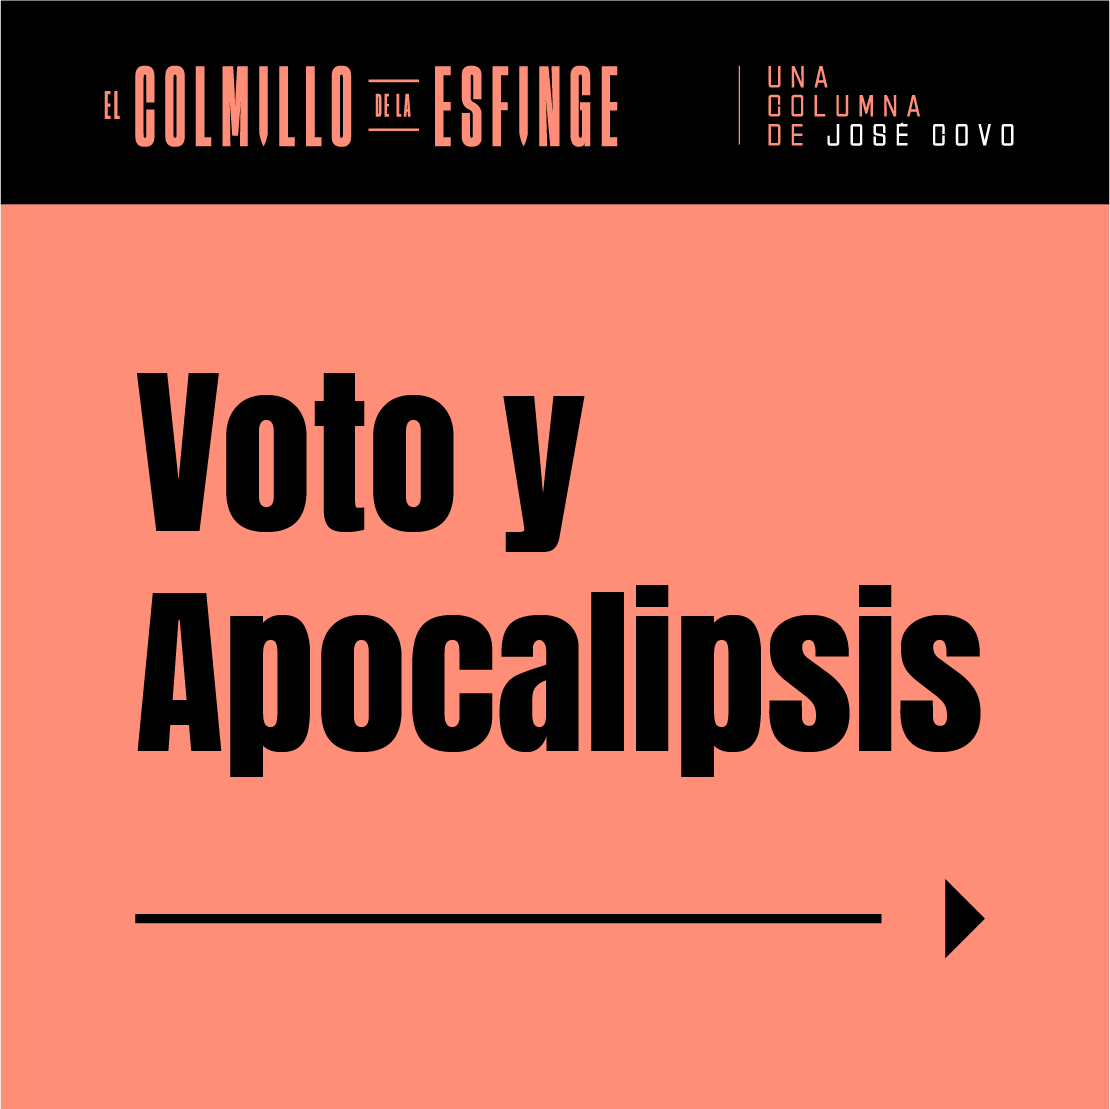 voto y apocalipsis